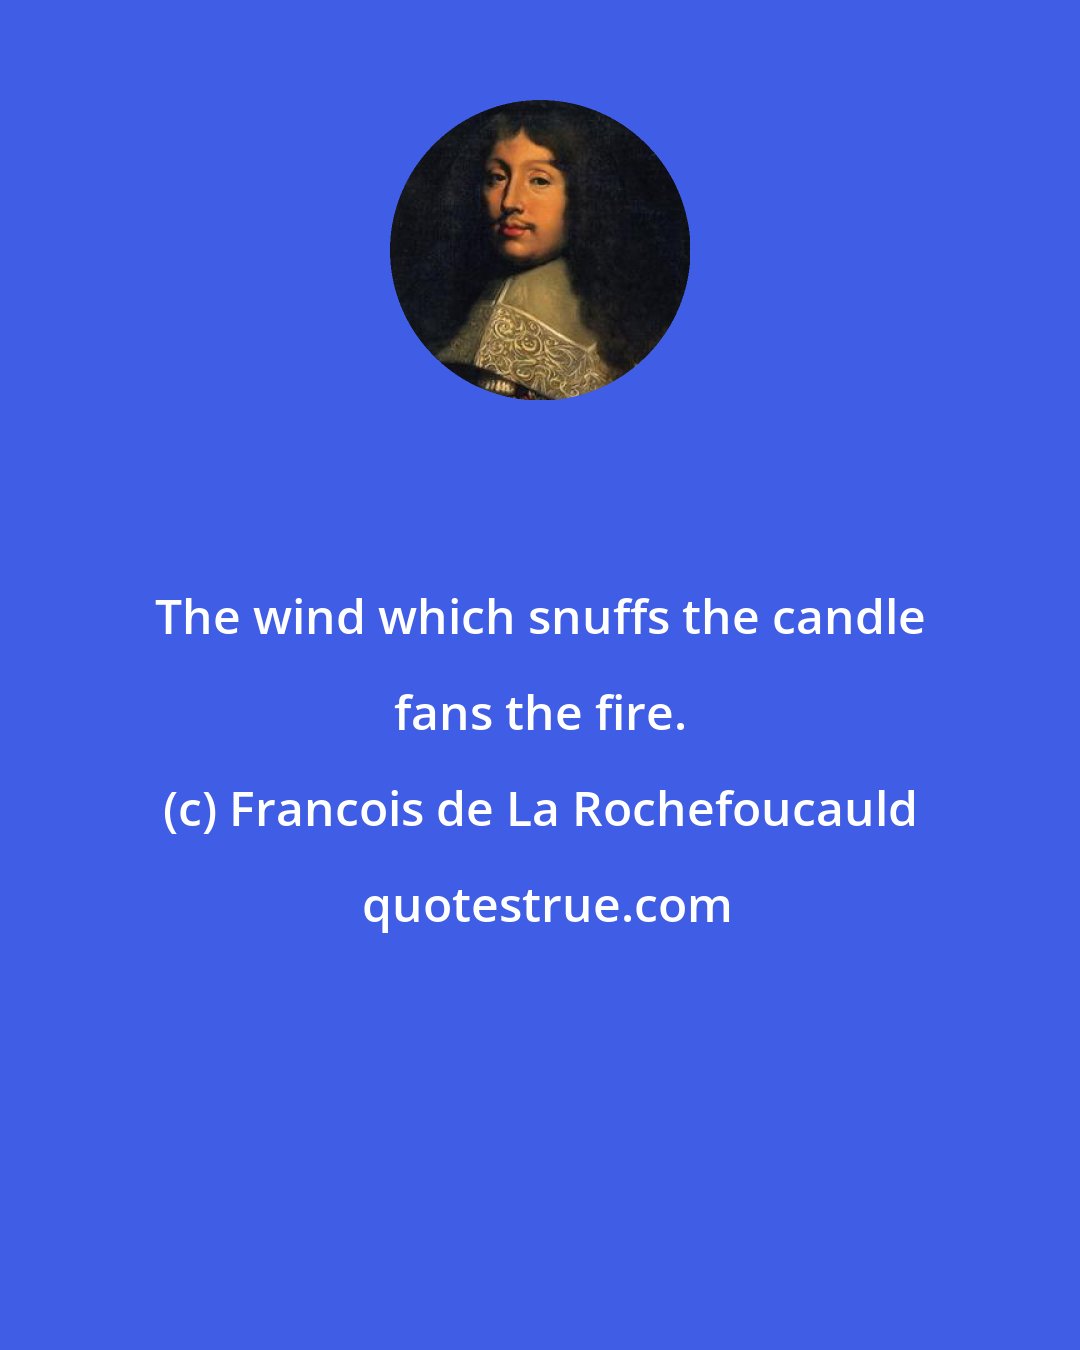 Francois de La Rochefoucauld: The wind which snuffs the candle fans the fire.